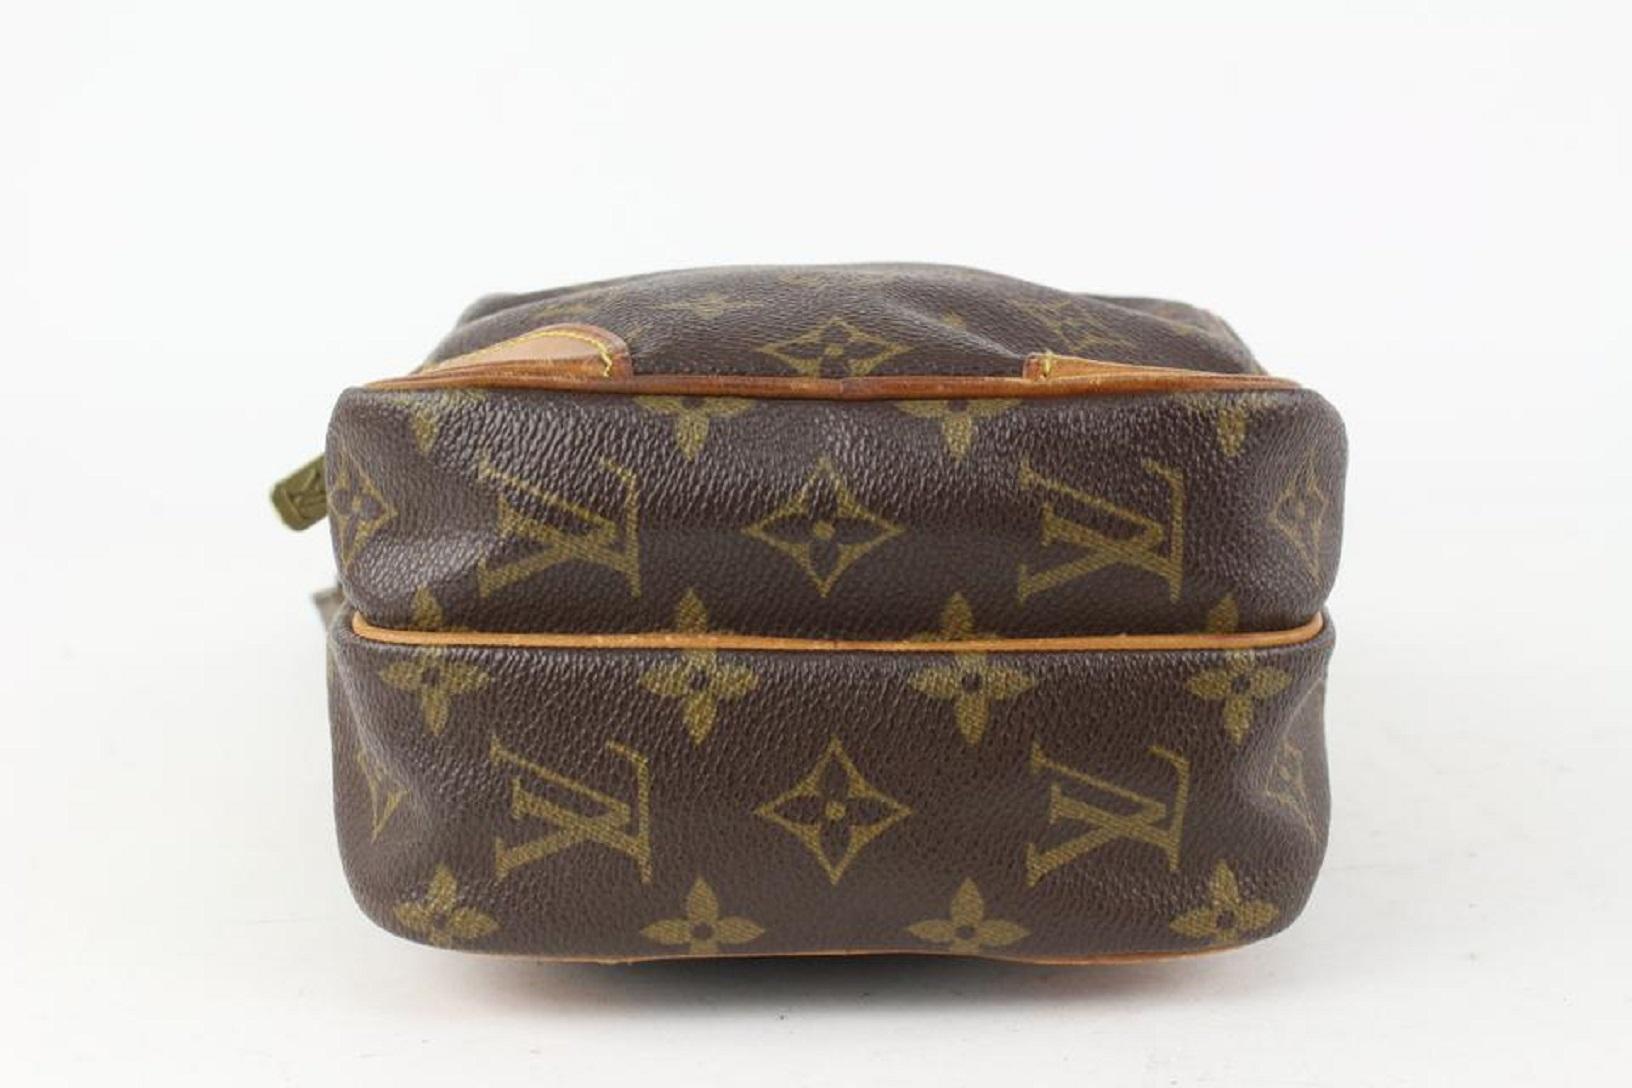 Women's Louis Vuitton Monogram Amazon Crossbody Bag 1014lv28